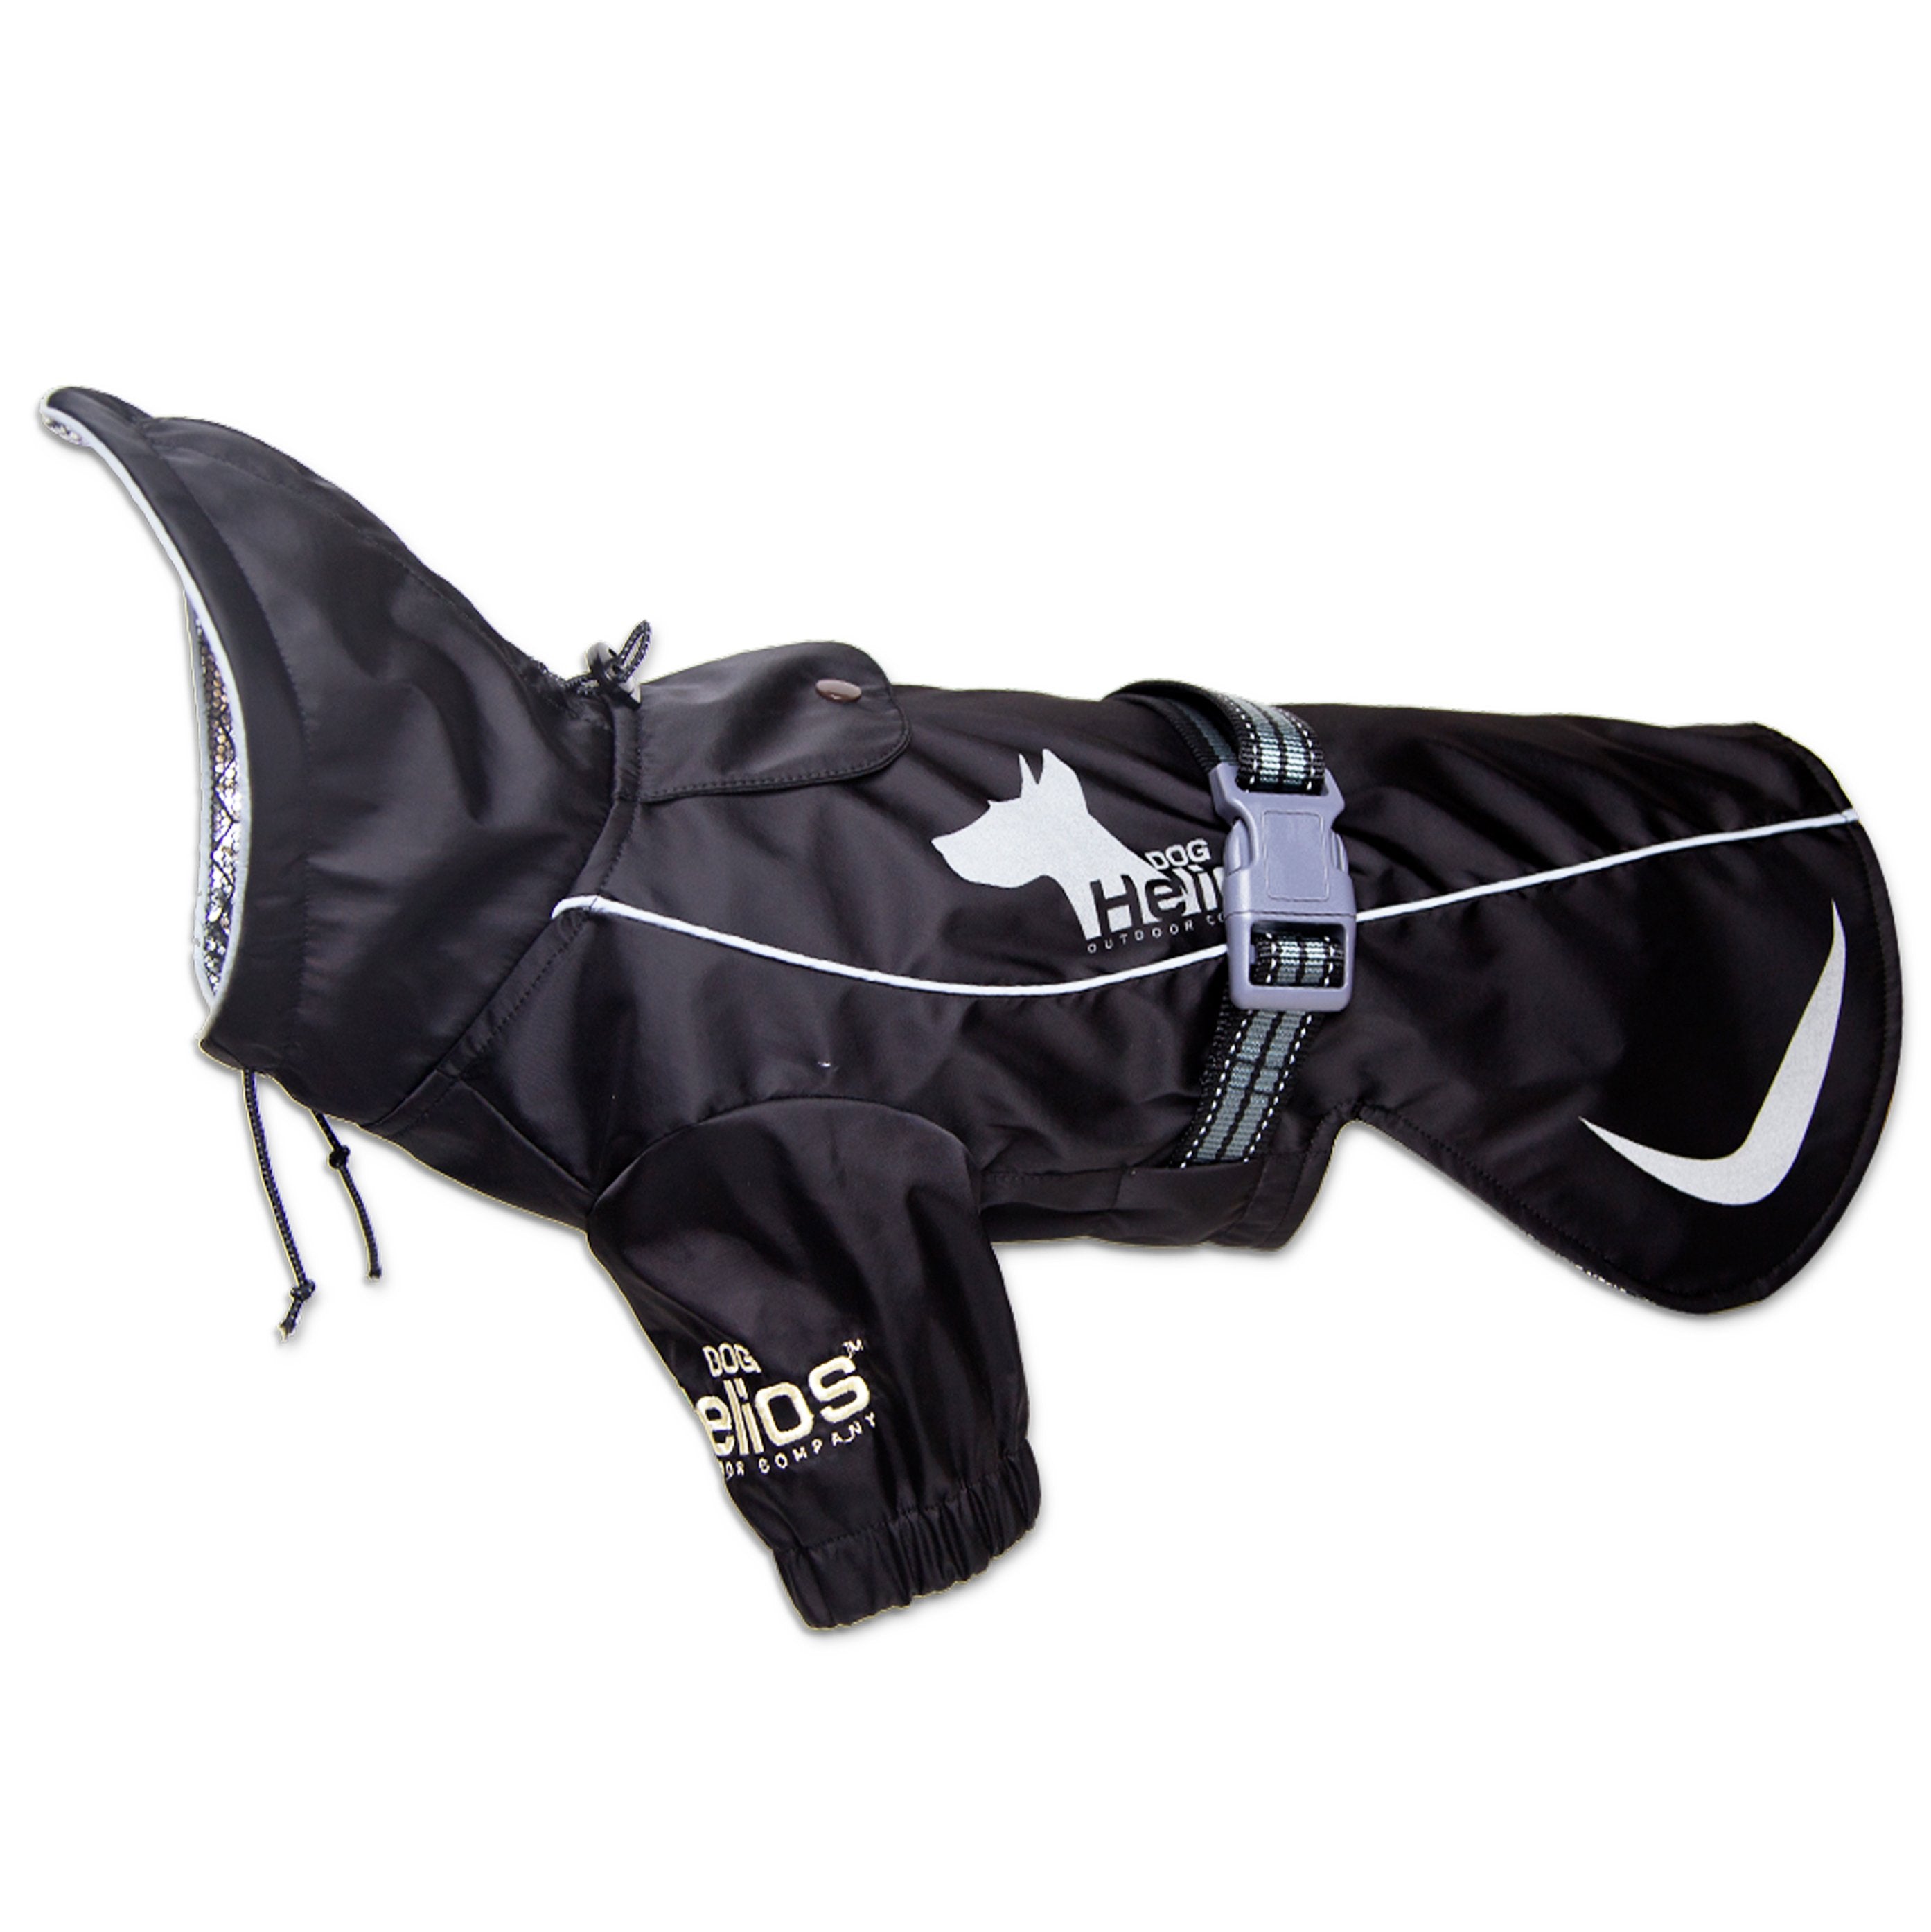 Dog Helios® 'Ice-Breaker' Hooded Dog Coat W/ Heat Reflective Tech - Black - X-Large